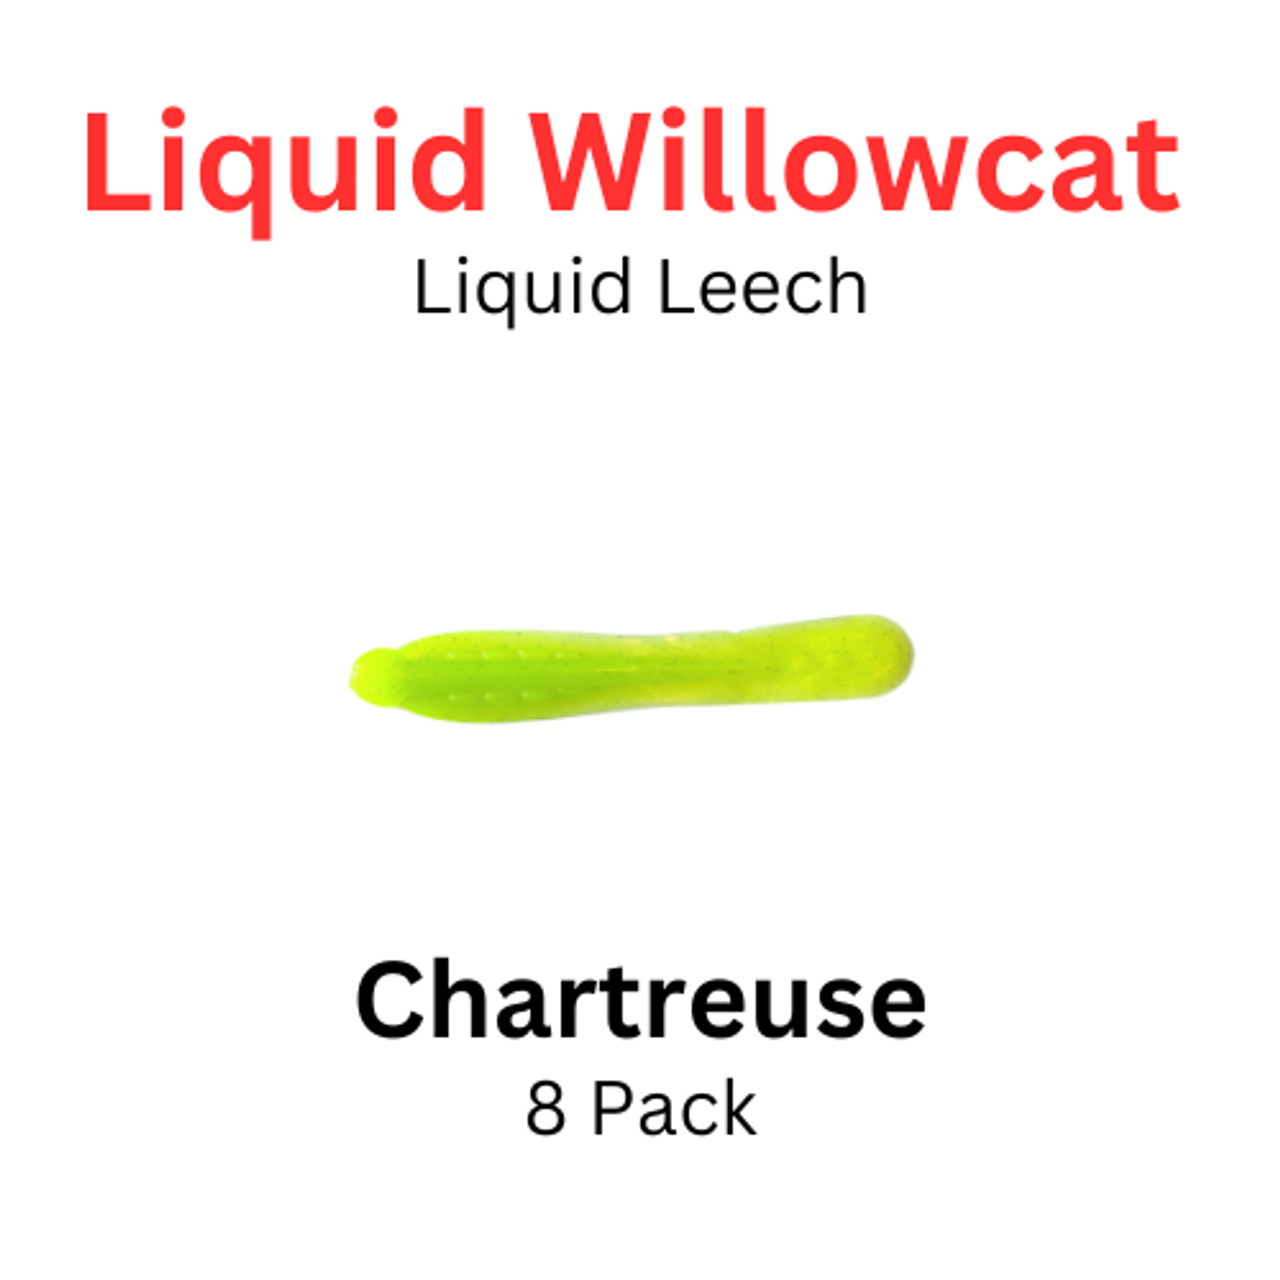 LIQUID WILLOWCAT Soft Plastic LIQUID LEECH CHARTREUSE 8 Pack